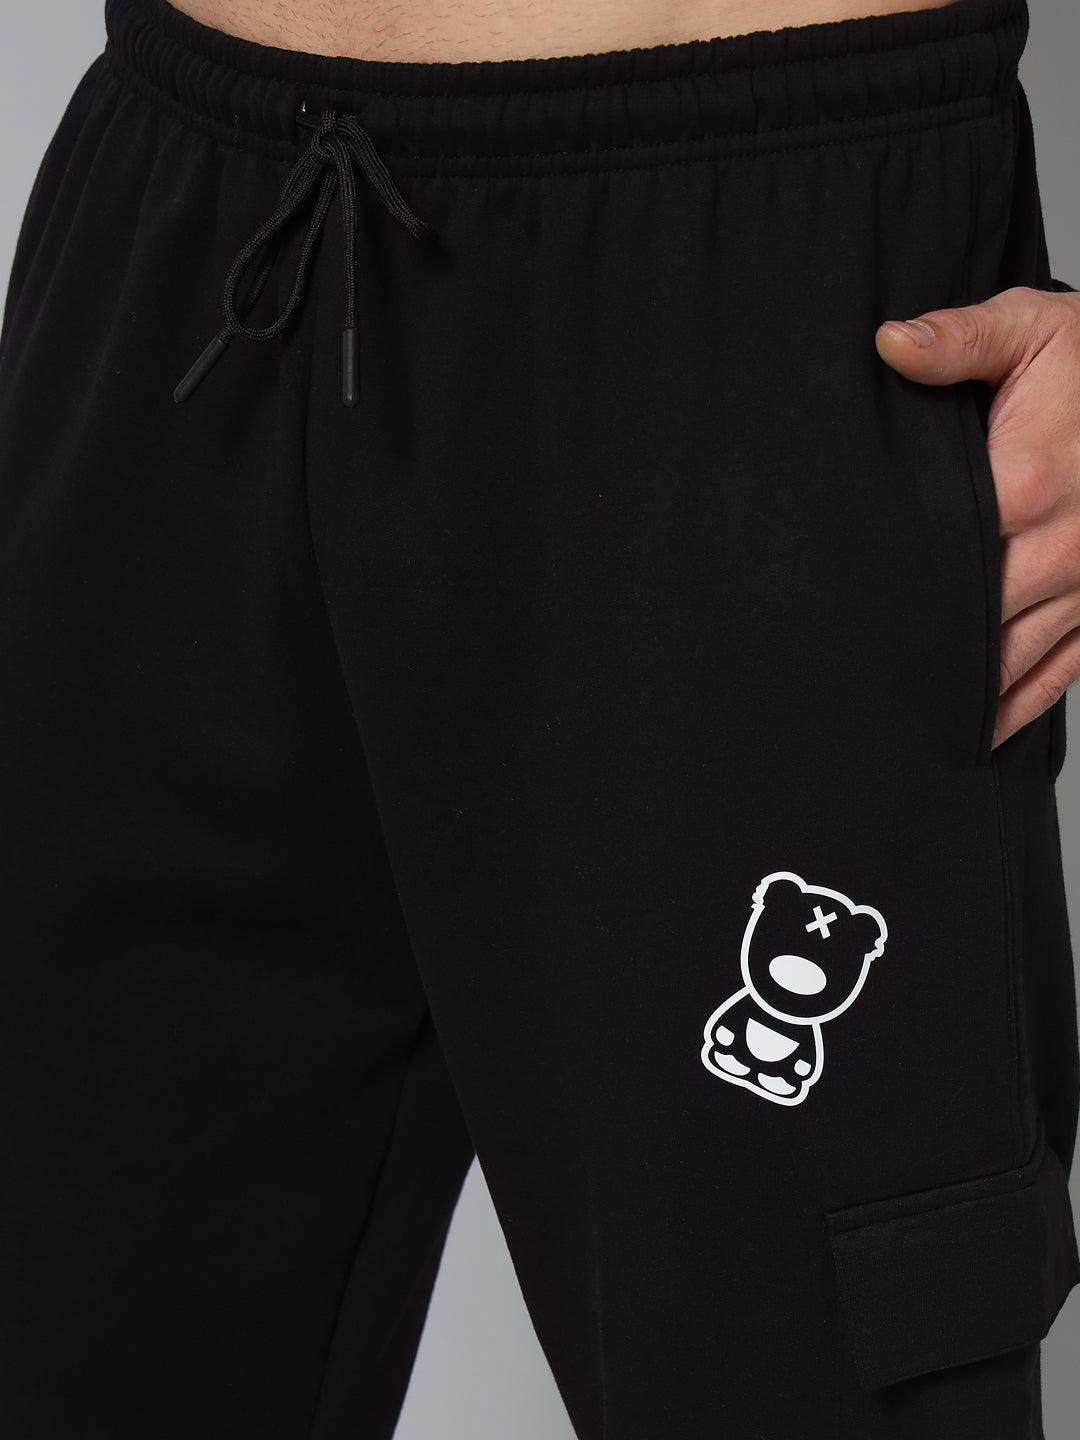 GRIFFEL Men Fleece 6 Pocket Front Logo Black Teddy Printed Trackpants - griffel